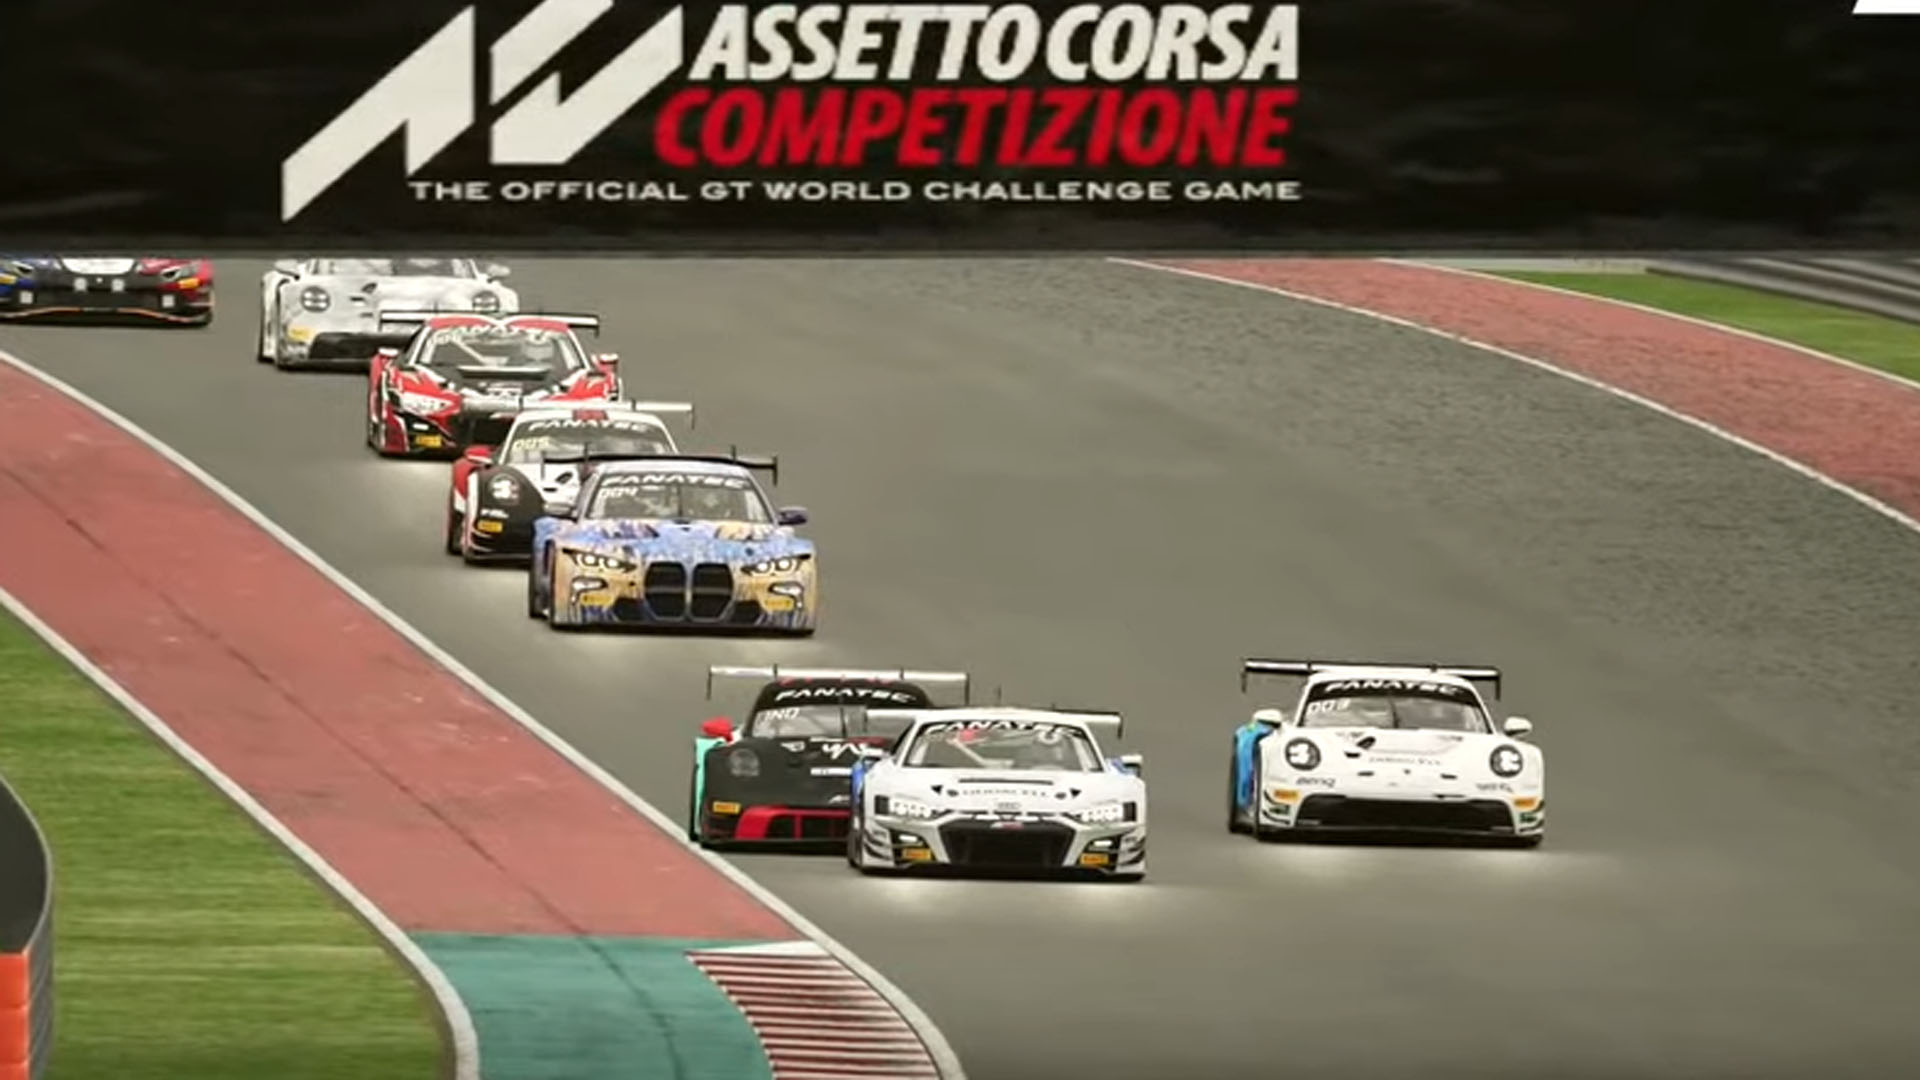 Assetto Corsa' named platform for FIA Motorsports Games